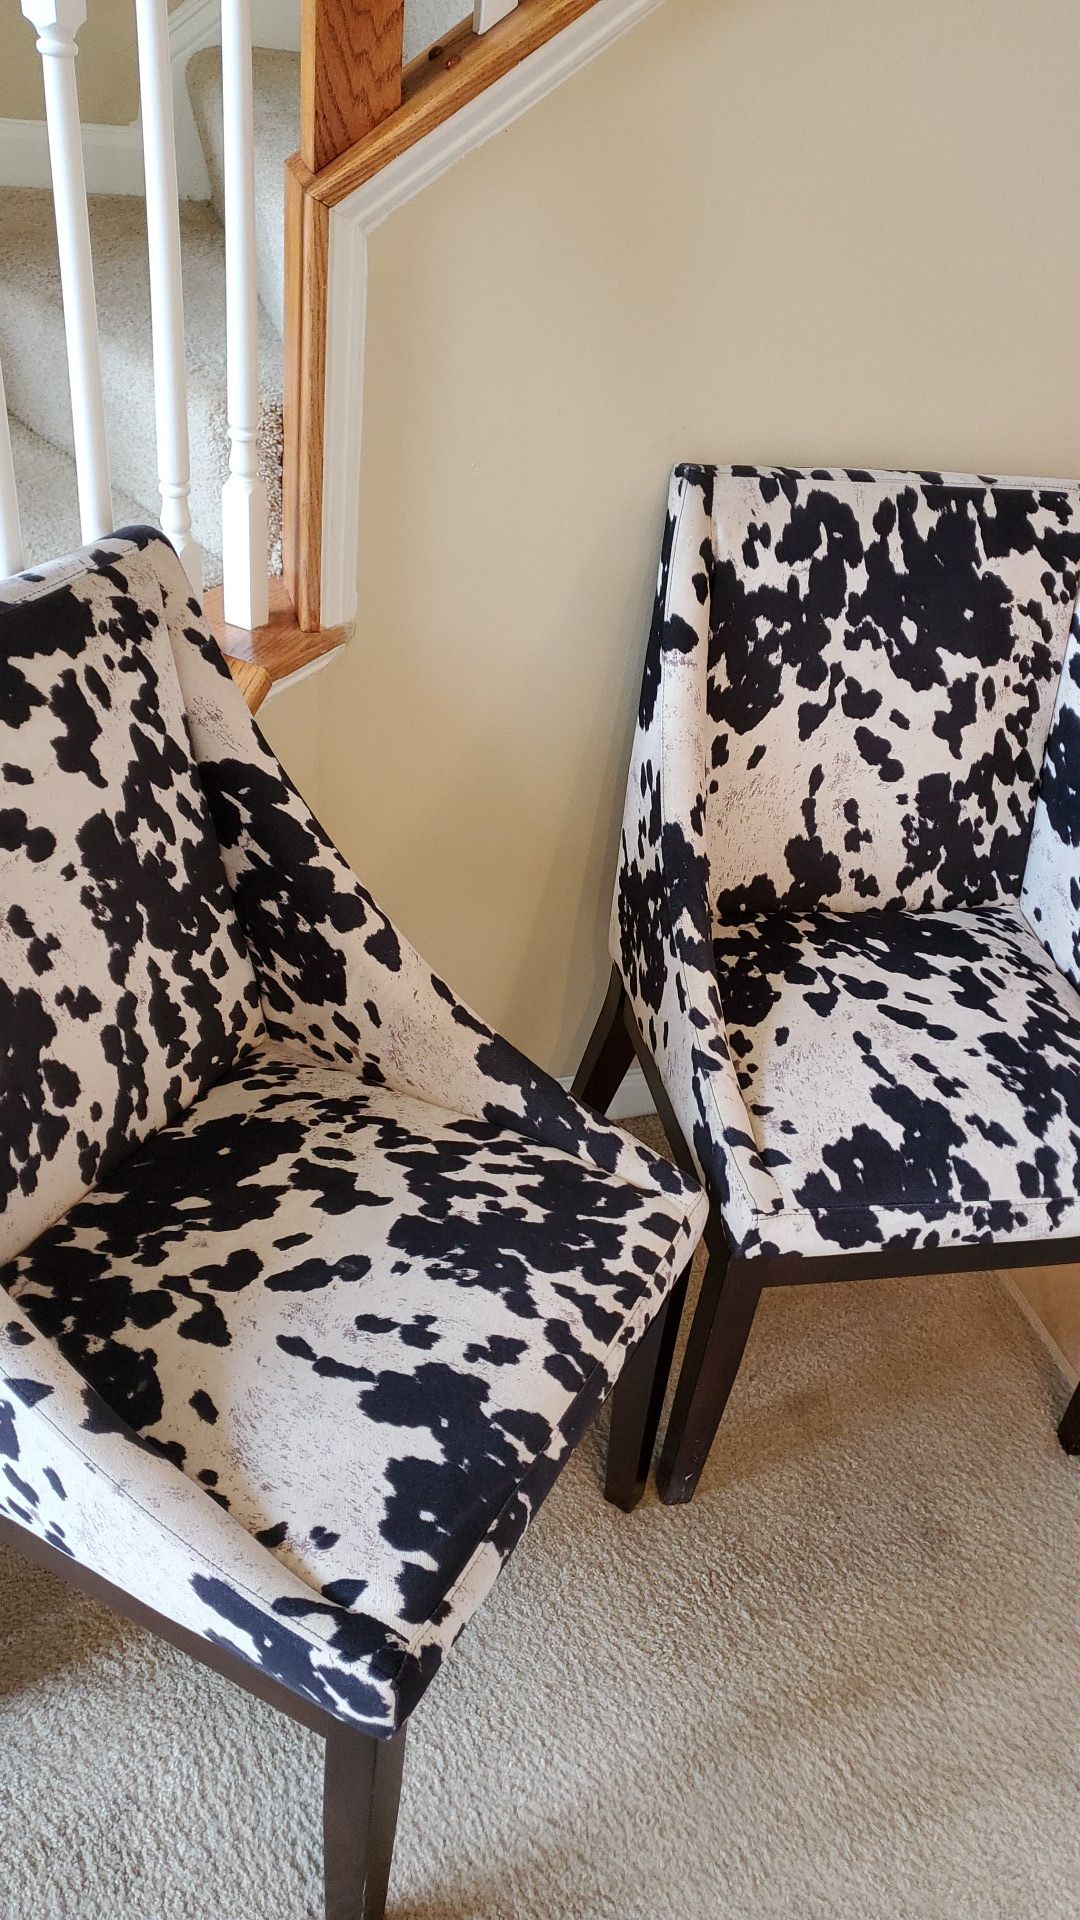 Decorative Chairs (2)